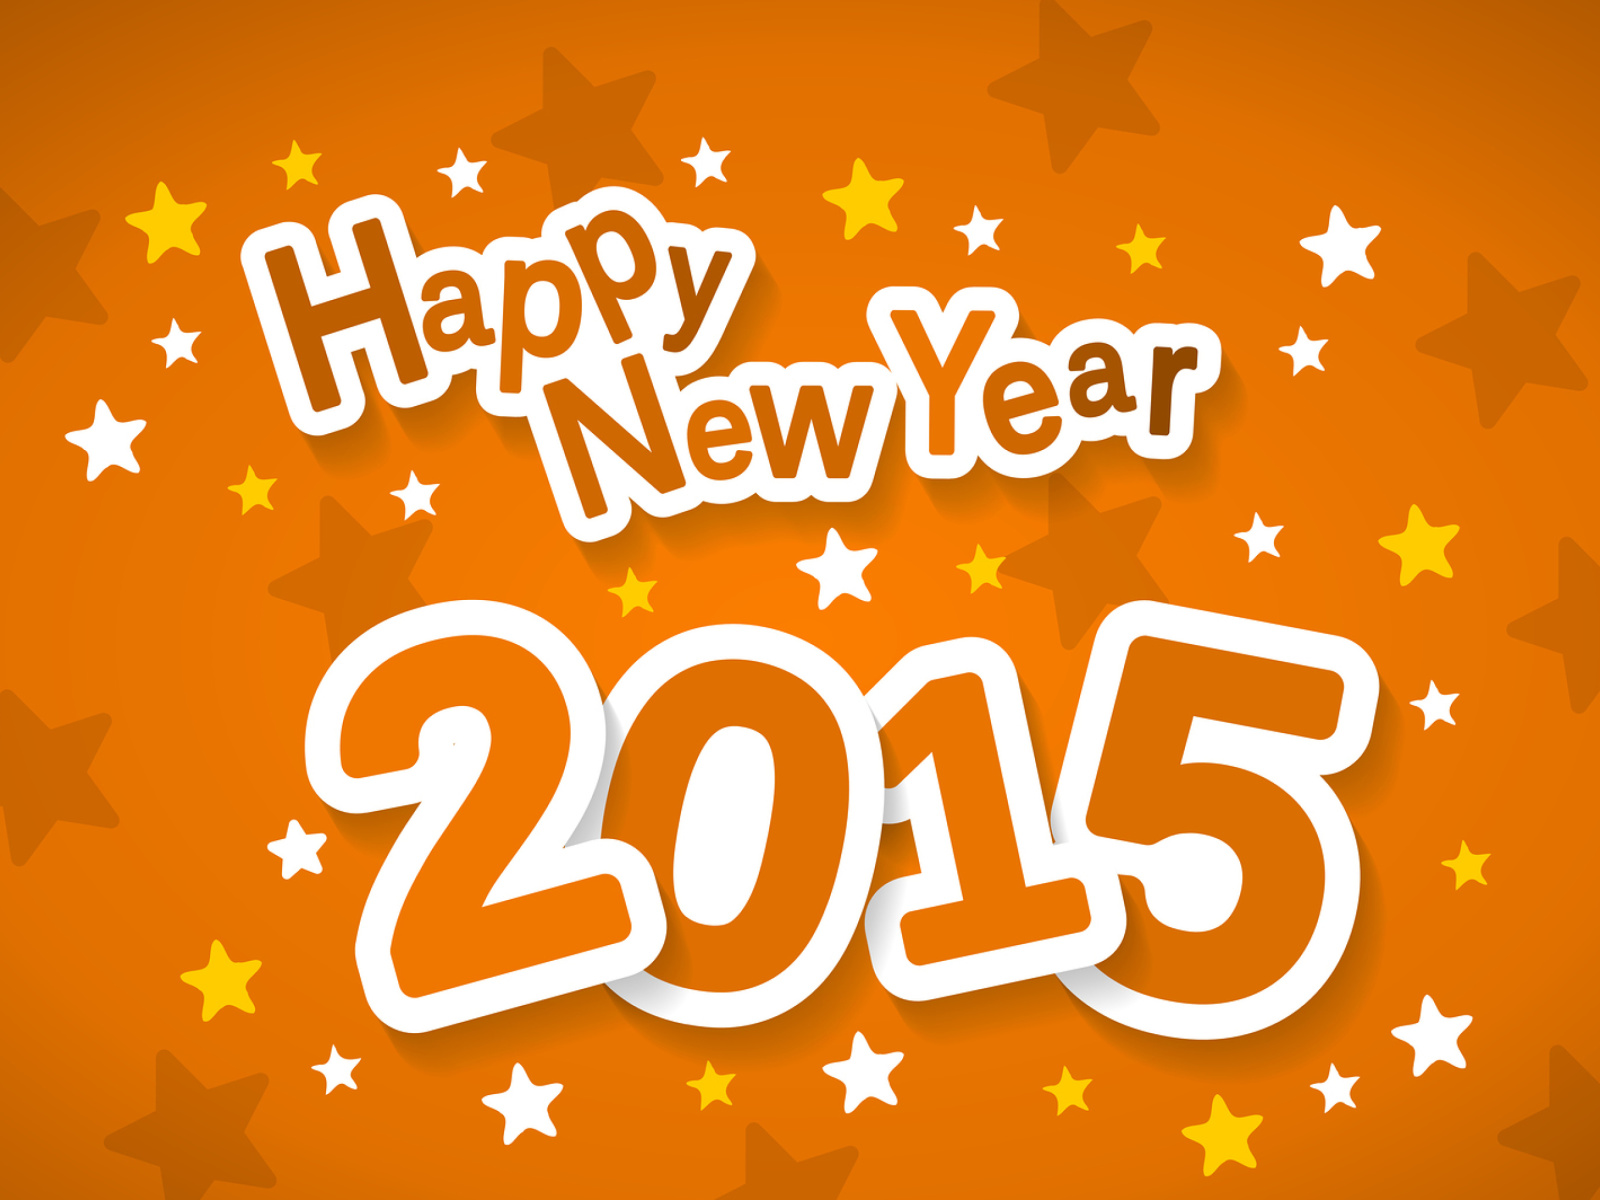 Happy New Year 2015 wallpaper 1600x1200